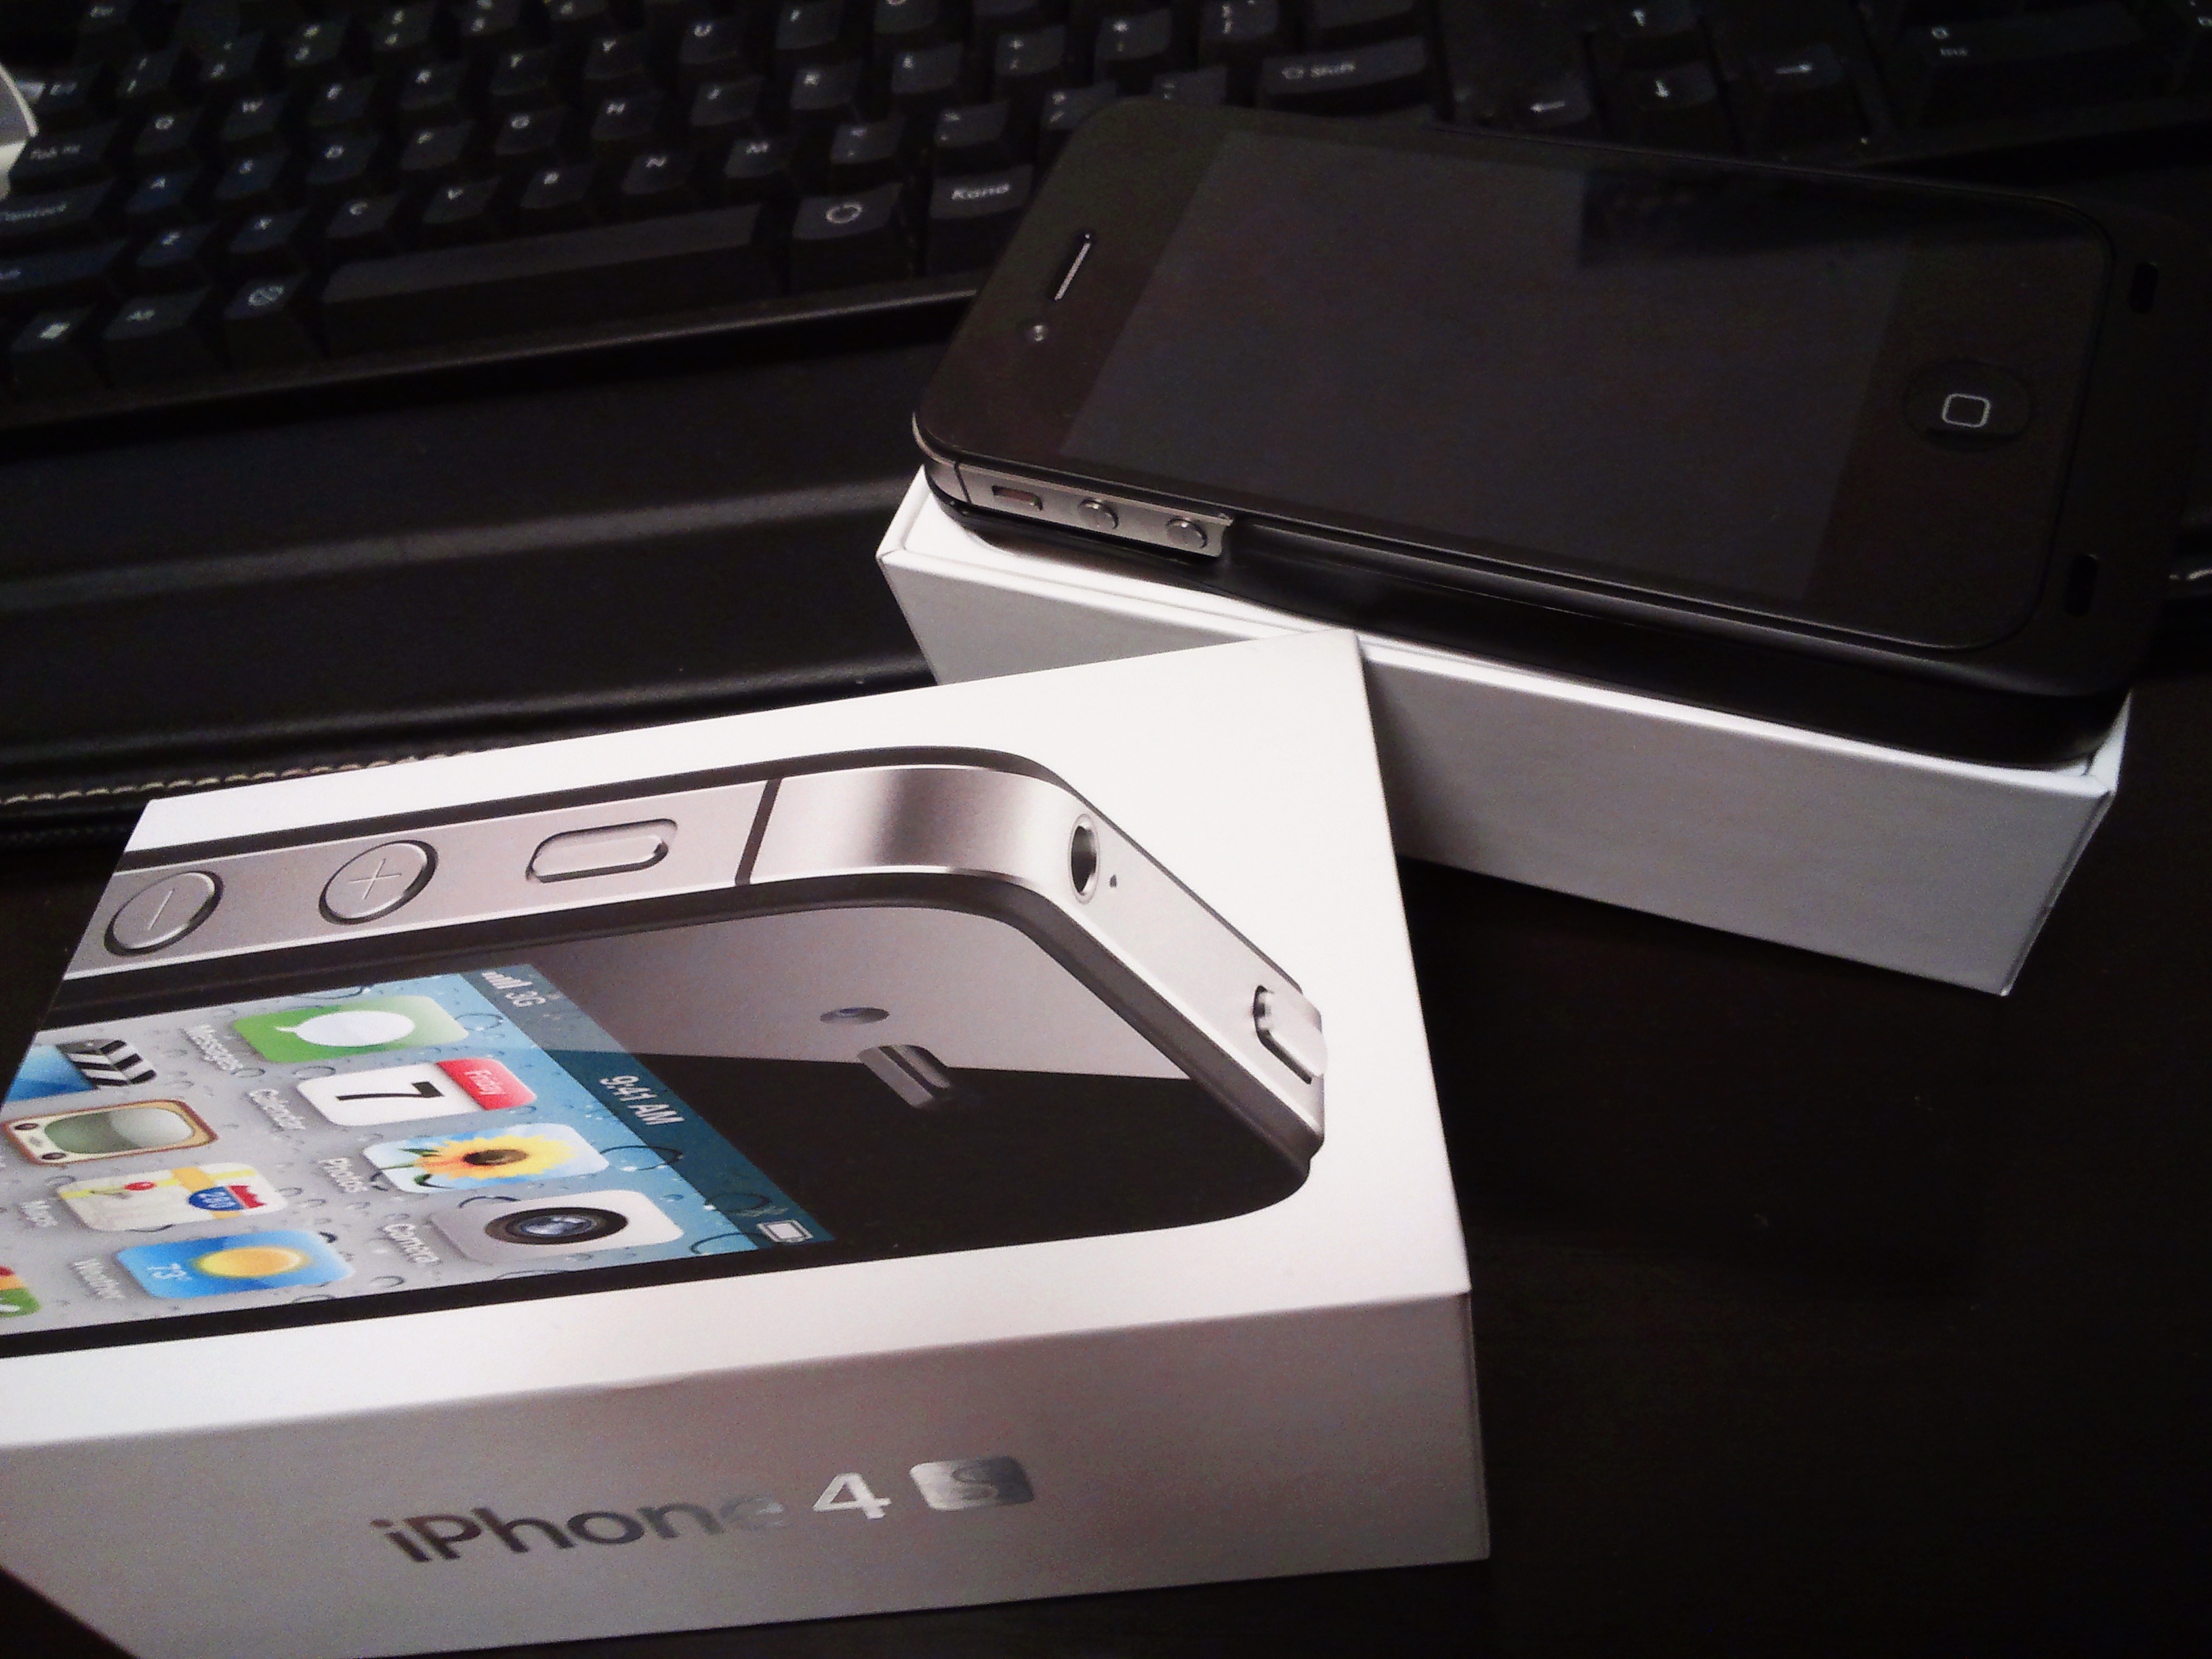 auのiPhone4Sを白ロムで買いました